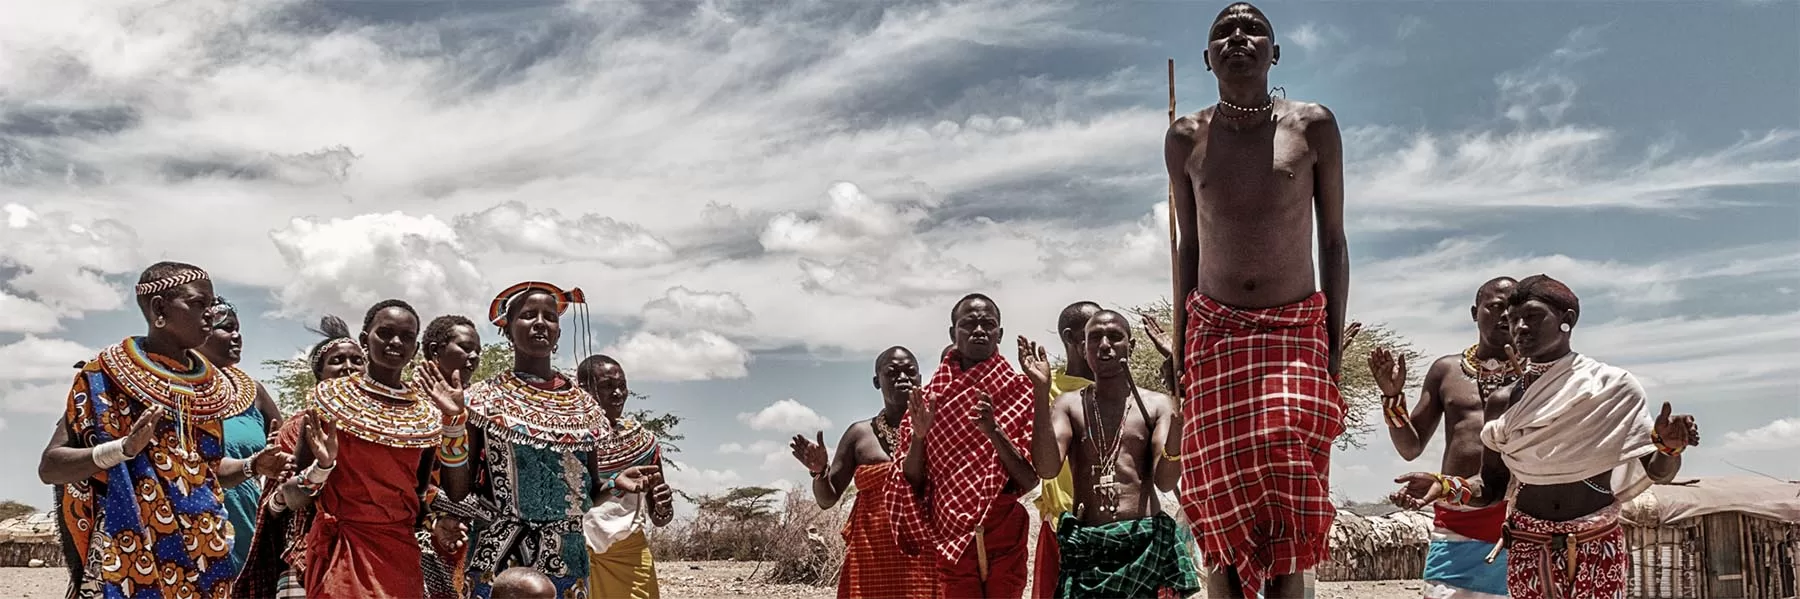 All about the Samburu tribe